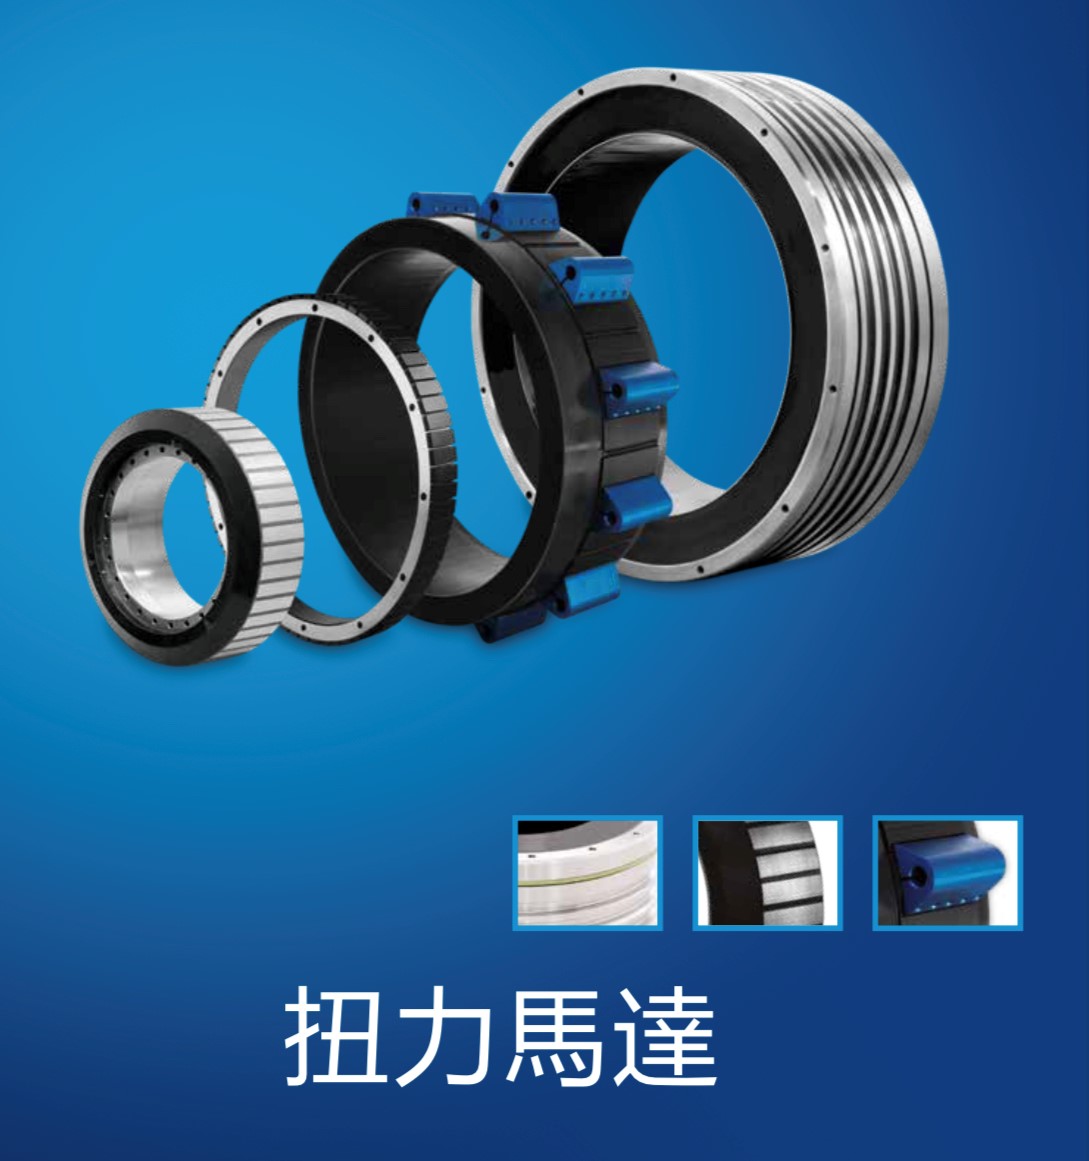 TIMTOS-Product Info.-ETEL Torque motor-HEIDENHAIN CO., LTD. (TAIWAN)